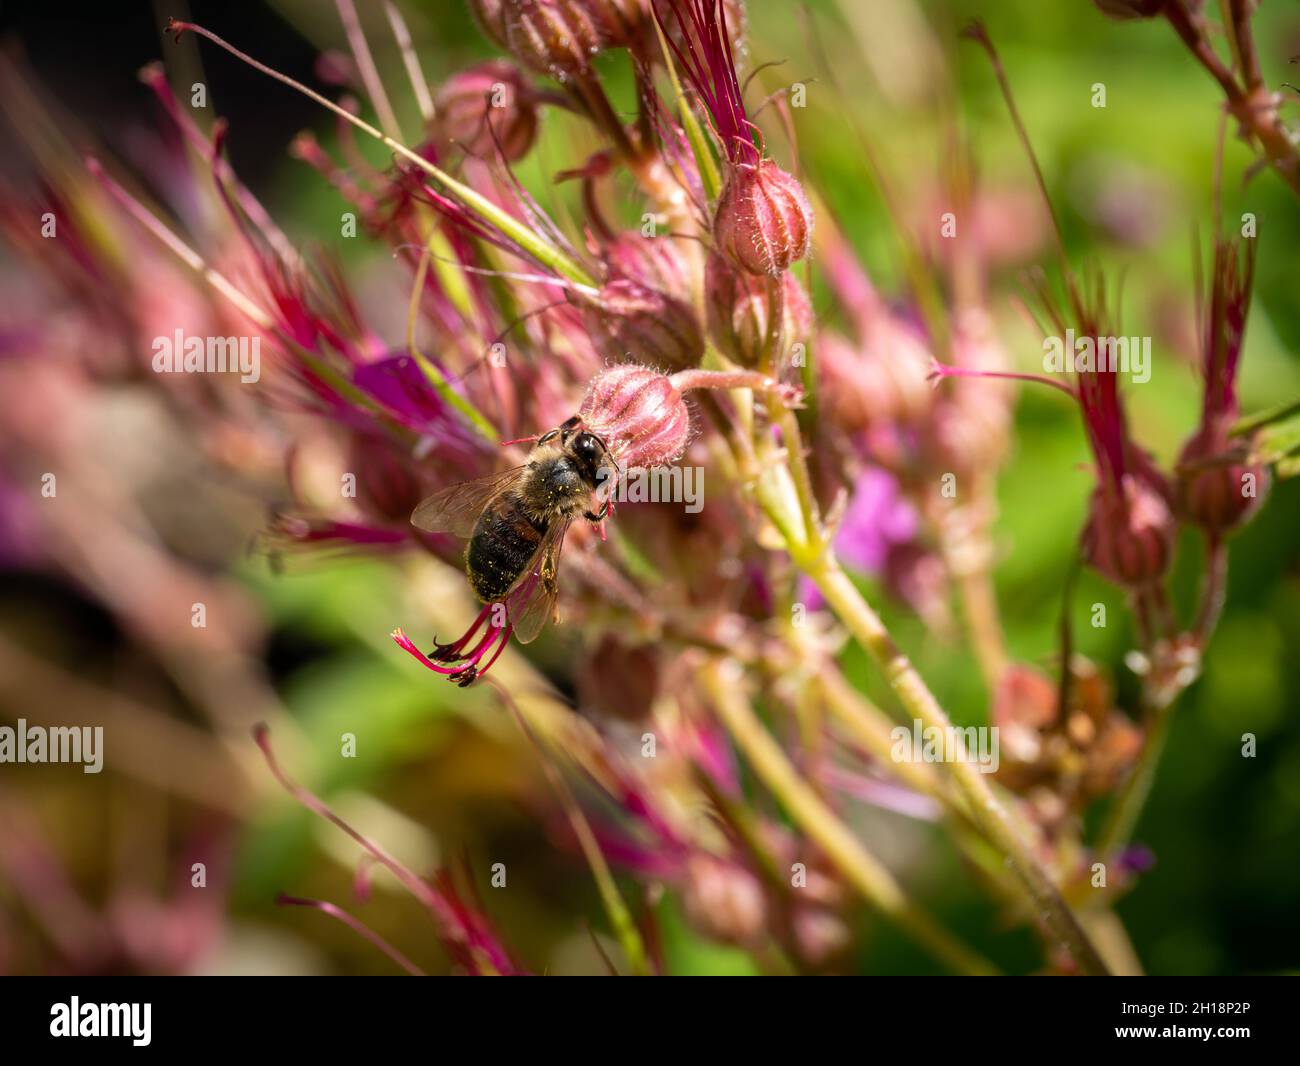 Honeybee, Apis mellifera, pollinating rock crane's bill, Geranium macrorrhizum, close up, Netherlands Stock Photo